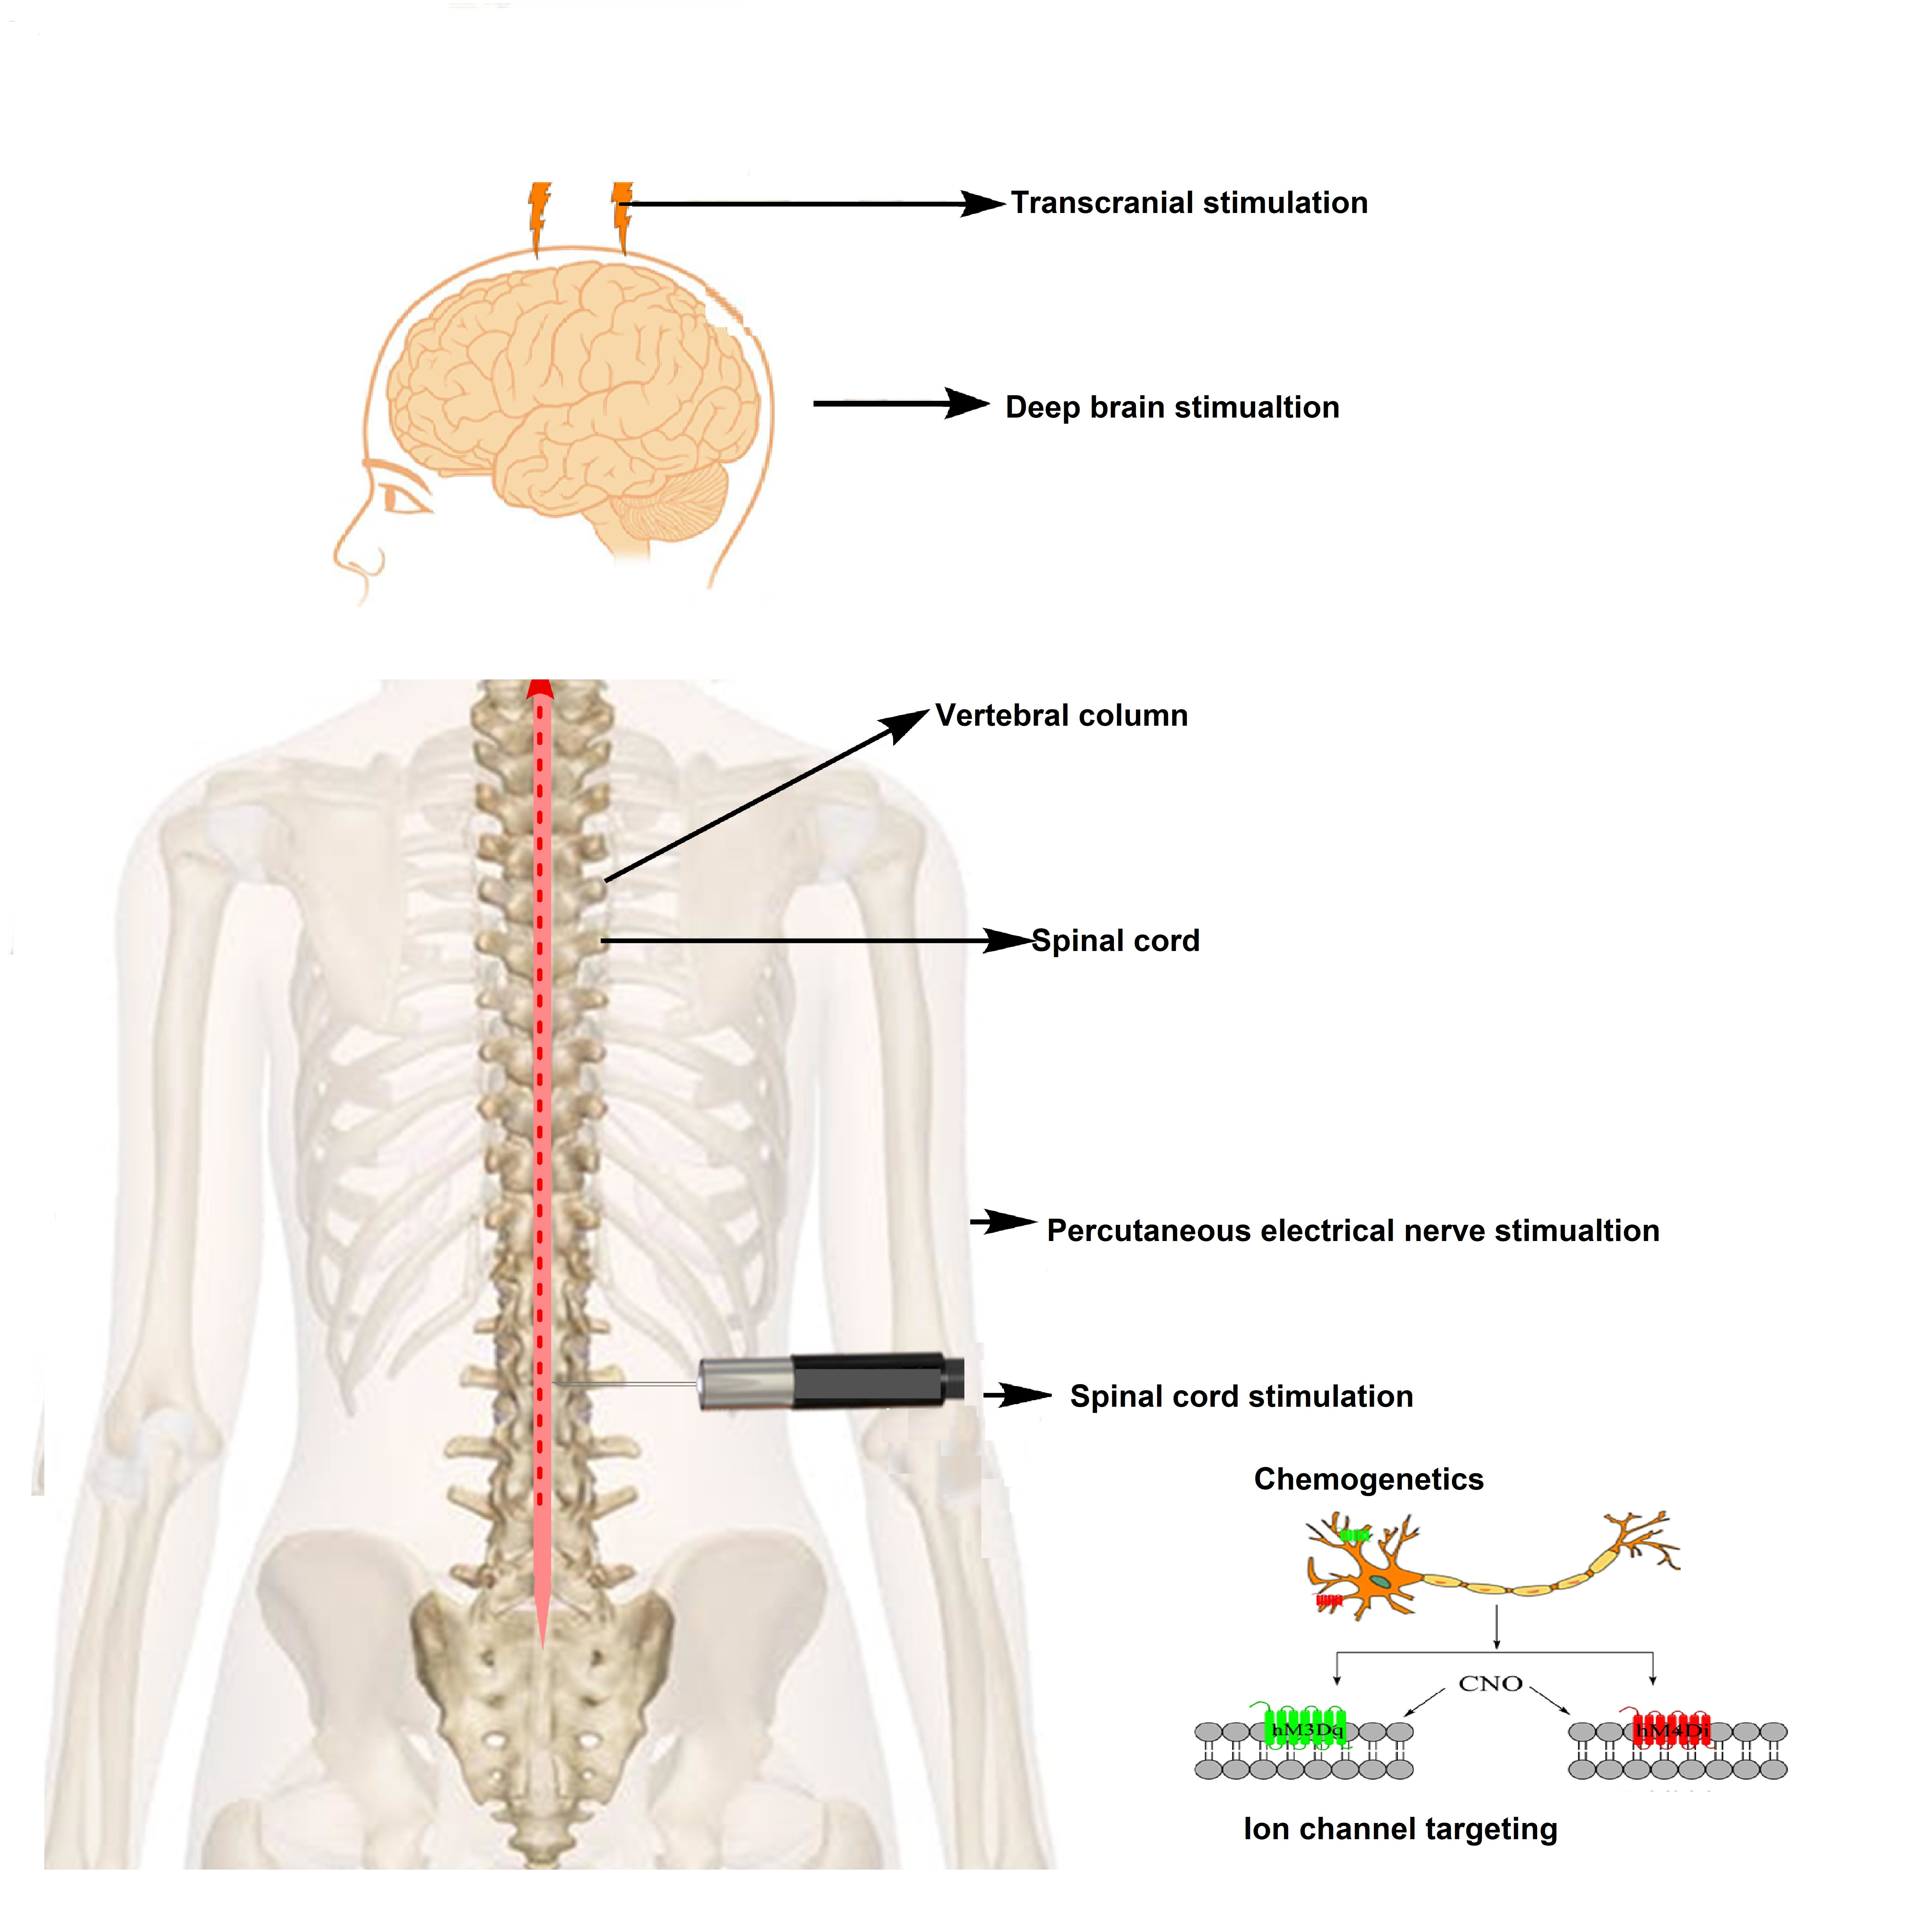 Peripheral Nerve Stimulators: Drug-Free, Low-Back Pain Relief